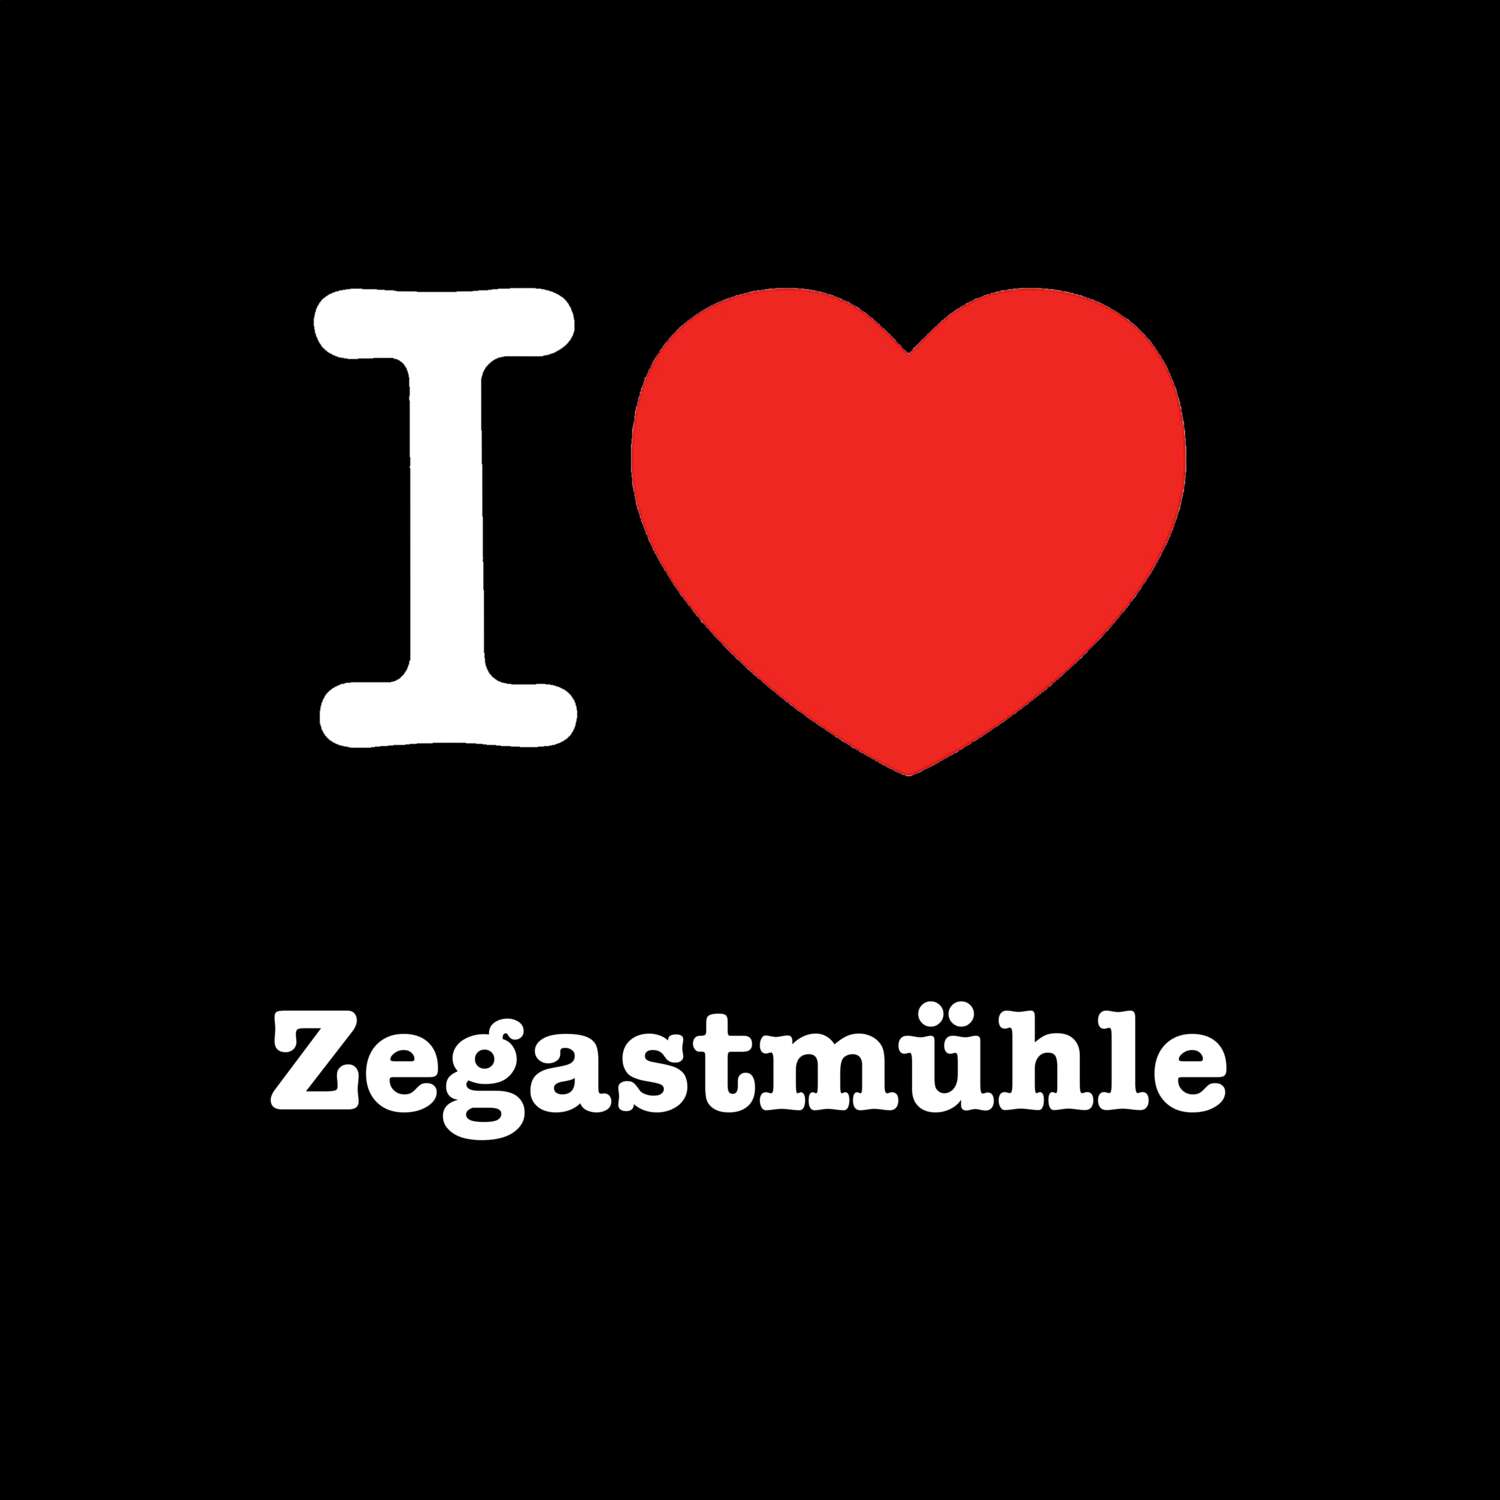 Zegastmühle T-Shirt »I love«